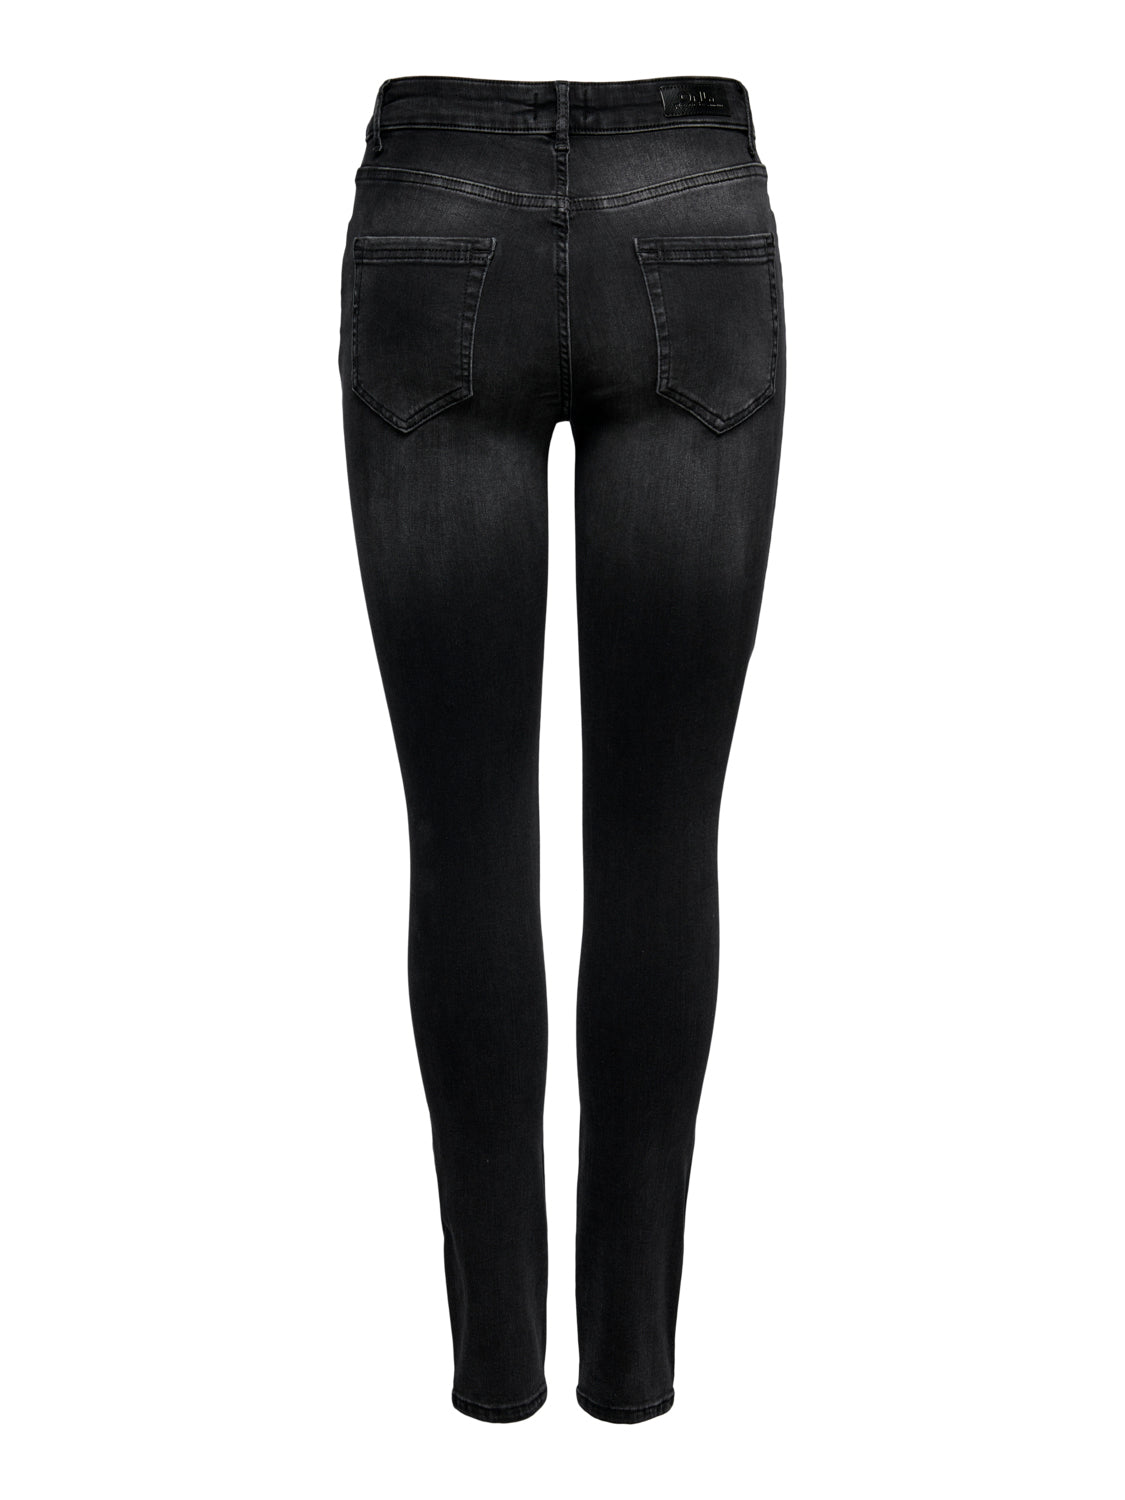 ONLBLUSH Jeans - Black Denim